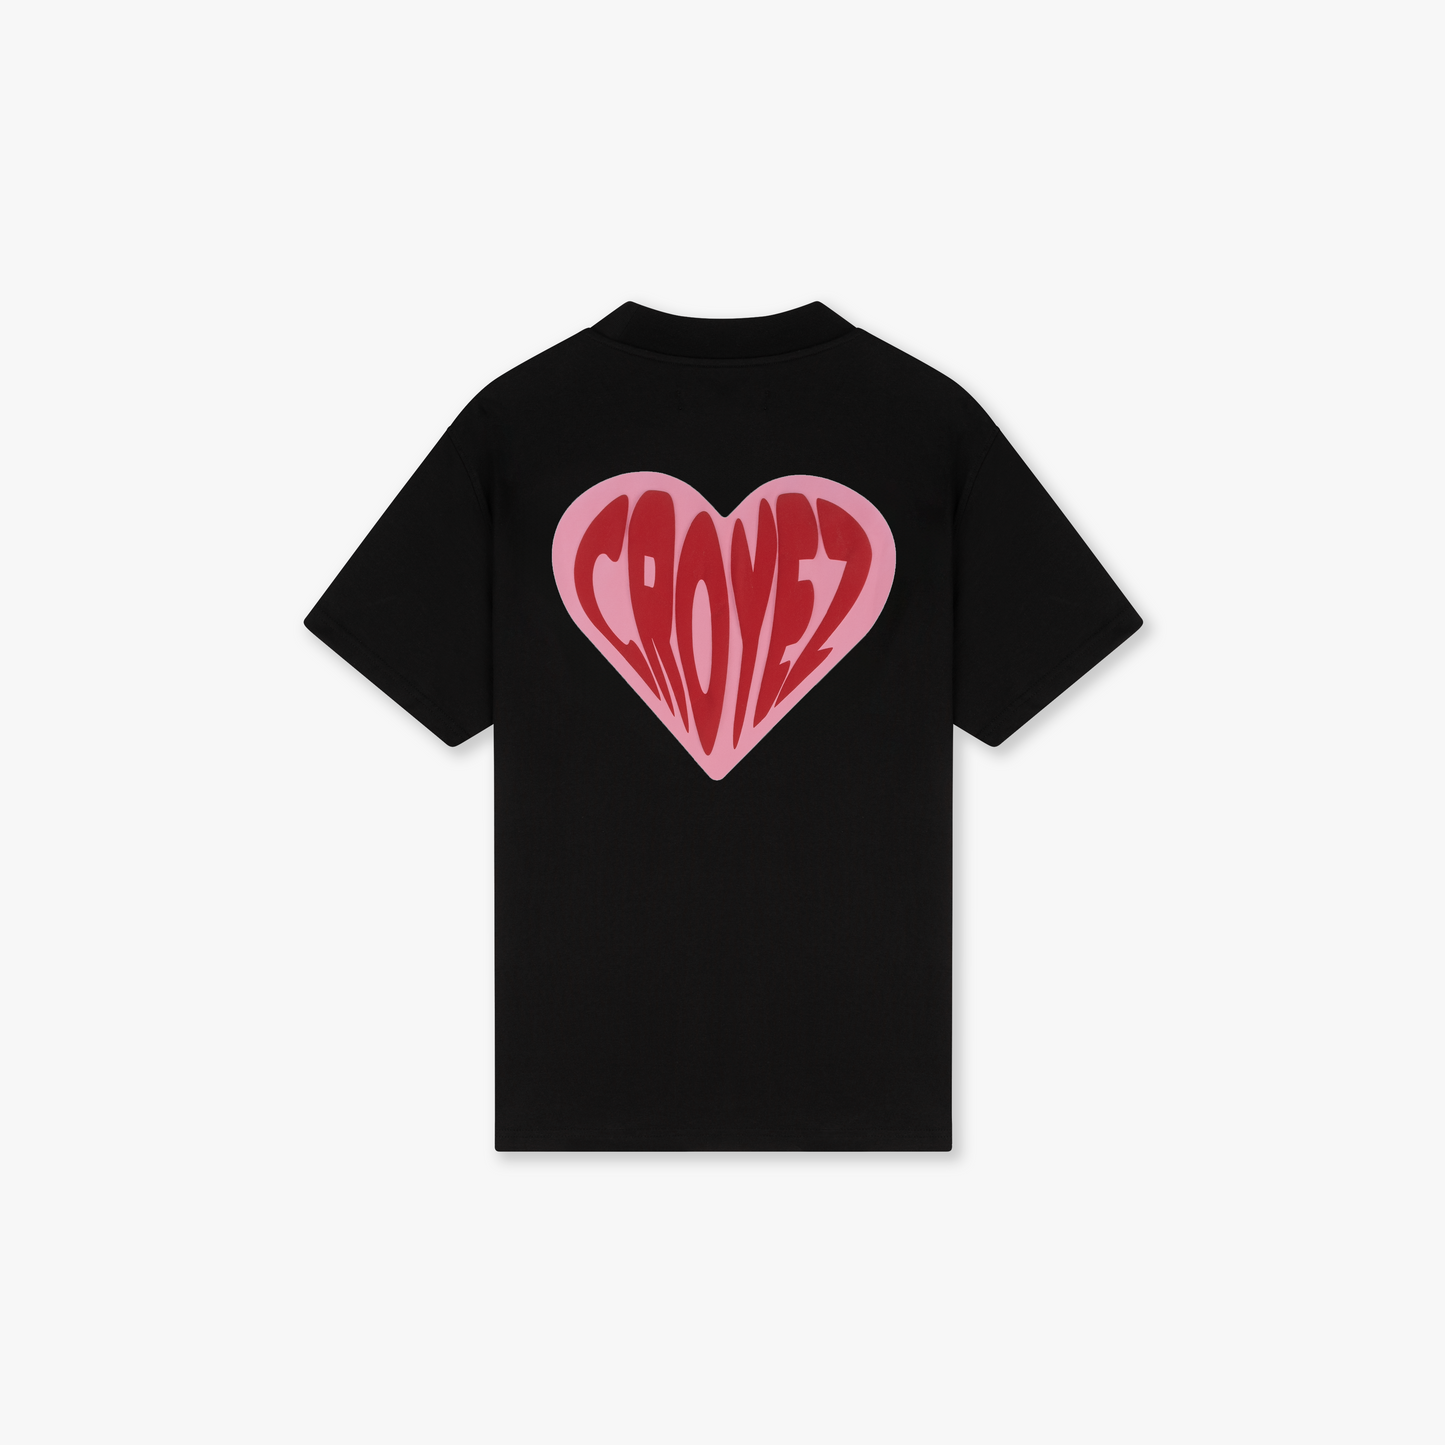 CROYEZ PUFFED HEART T-SHIRT - BLACK/RED